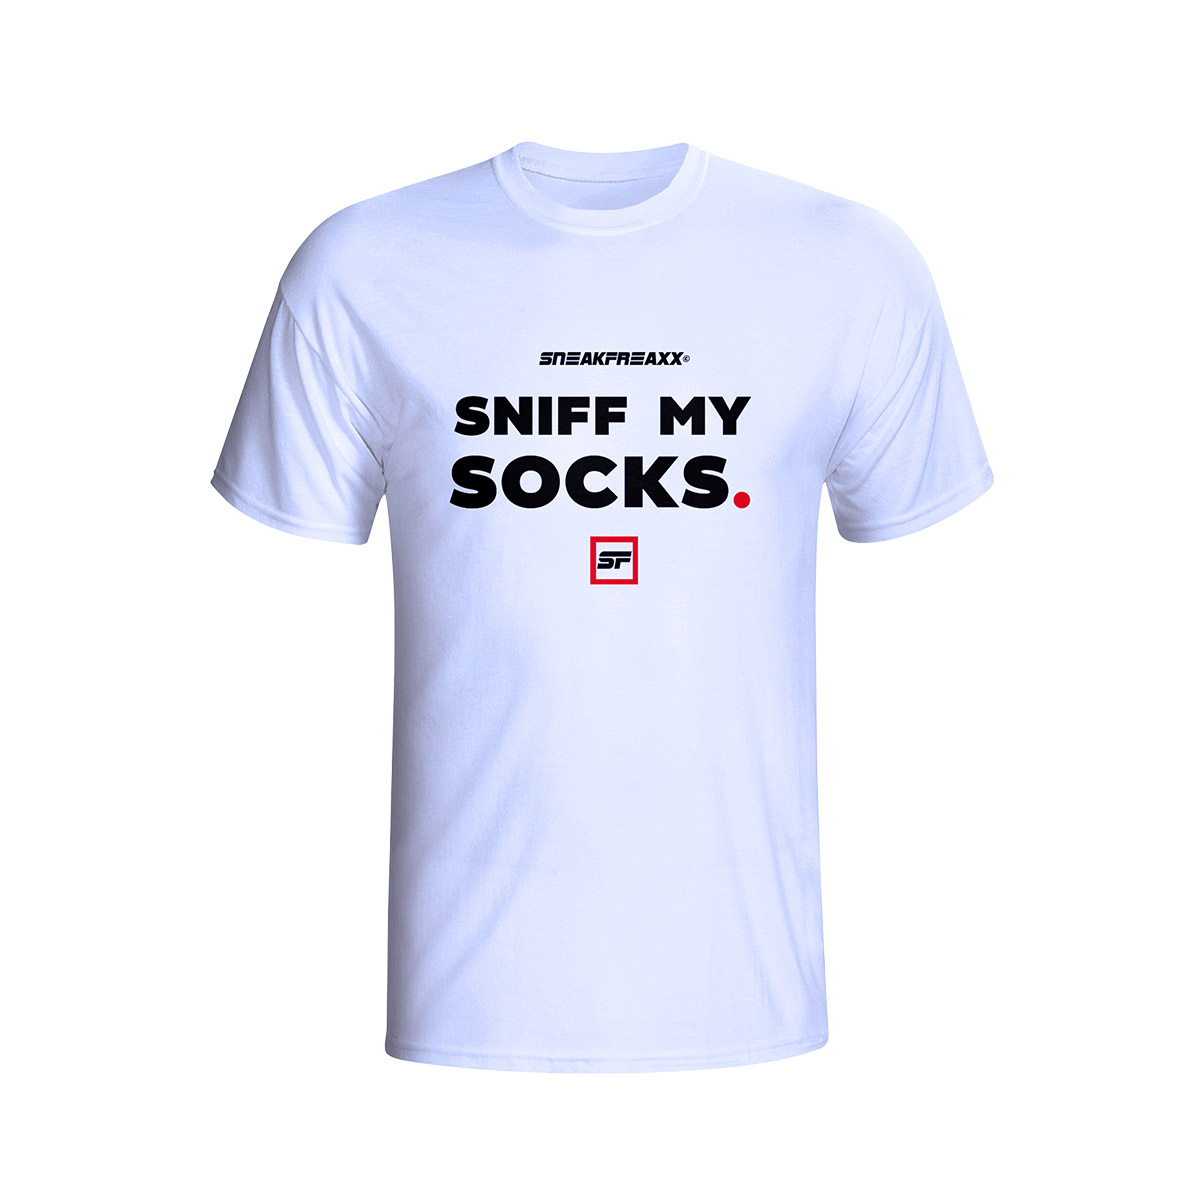 T-SHIRT - SNIFF MY SOCKS